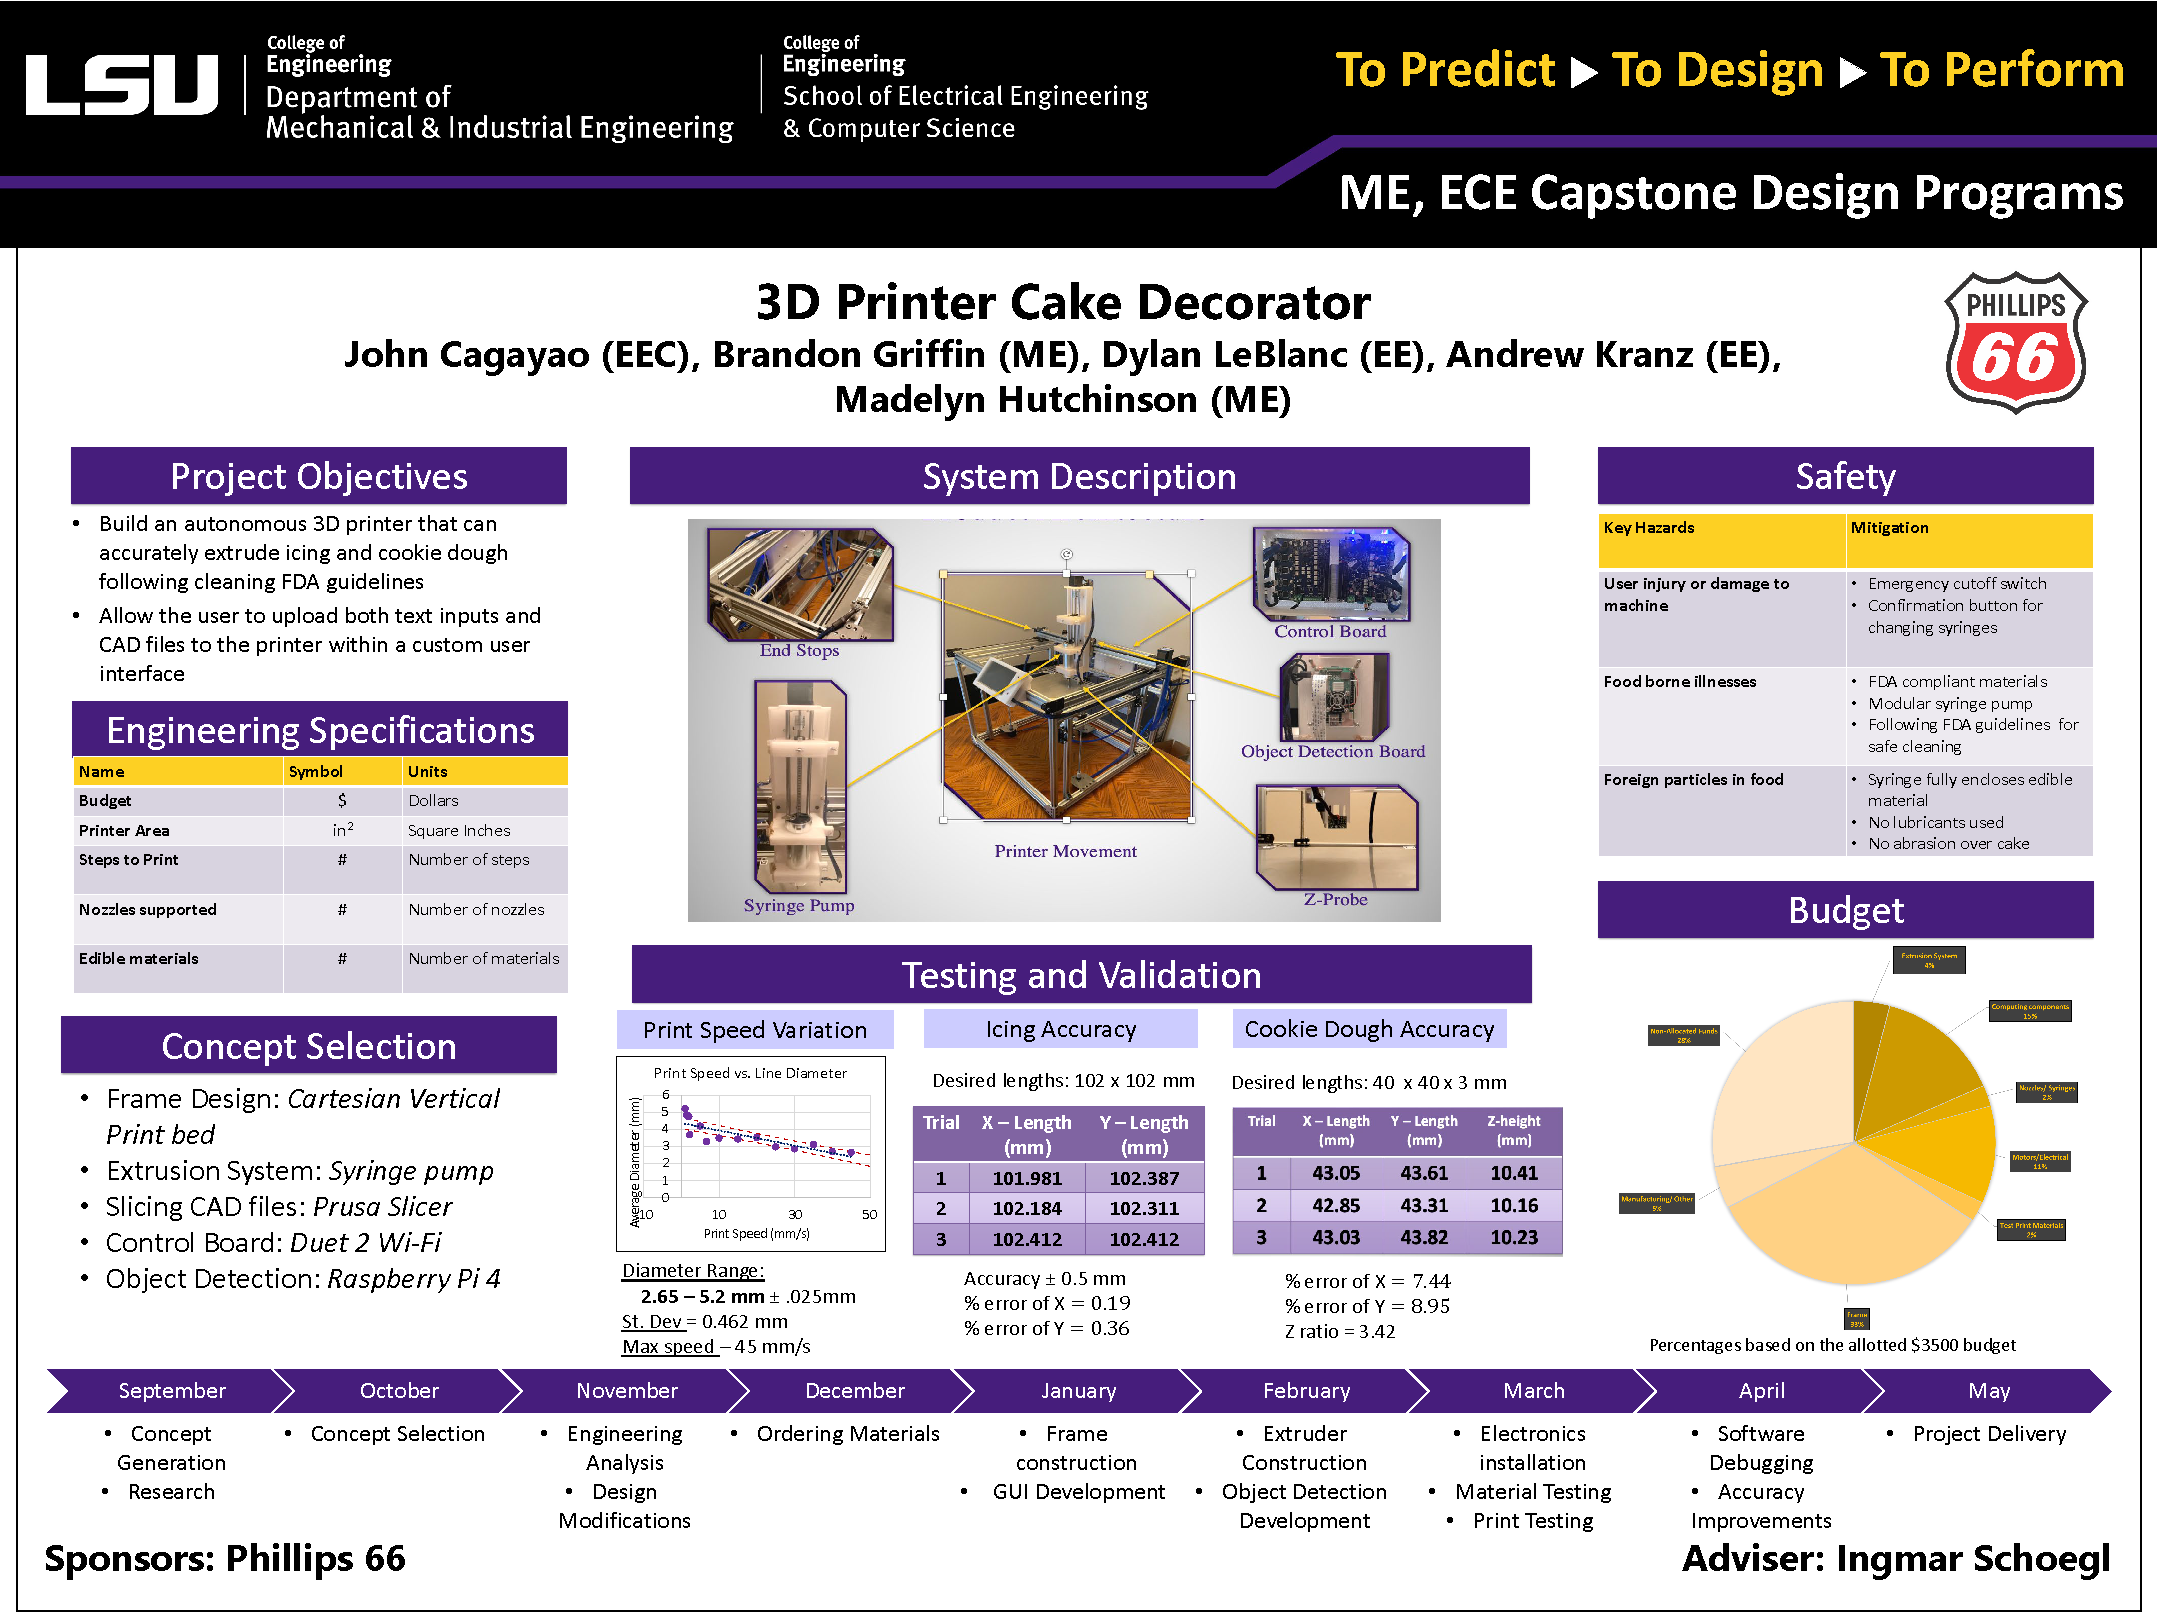 Project 36: 3D Printer Cake Decorator (2021)